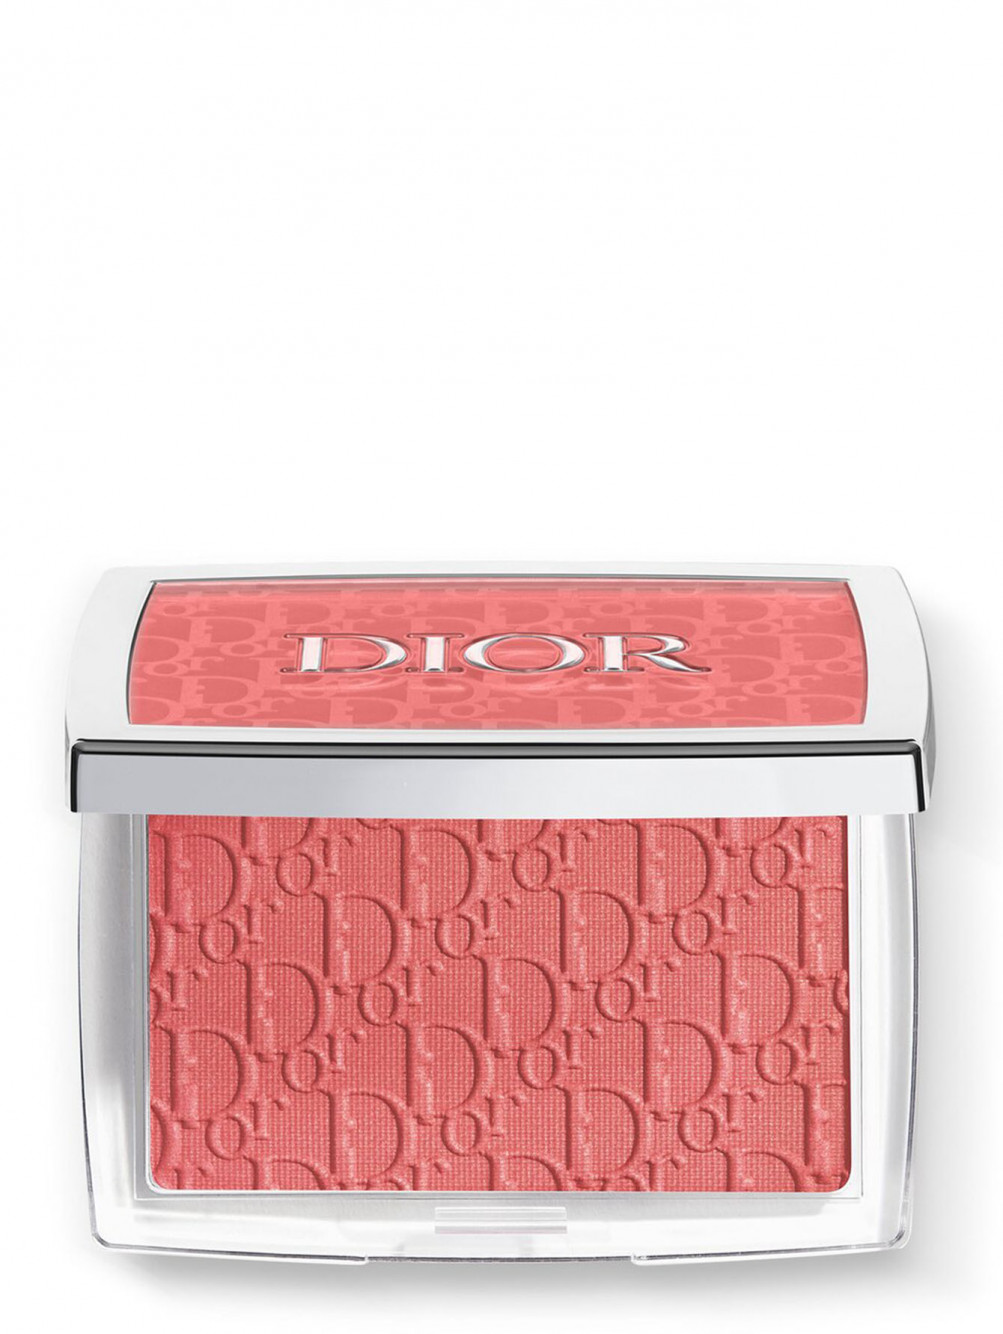 Румяна для лица Dior Backstage Rosy Glow, 012 Розовое Дерево, 4,4 г - Общий вид